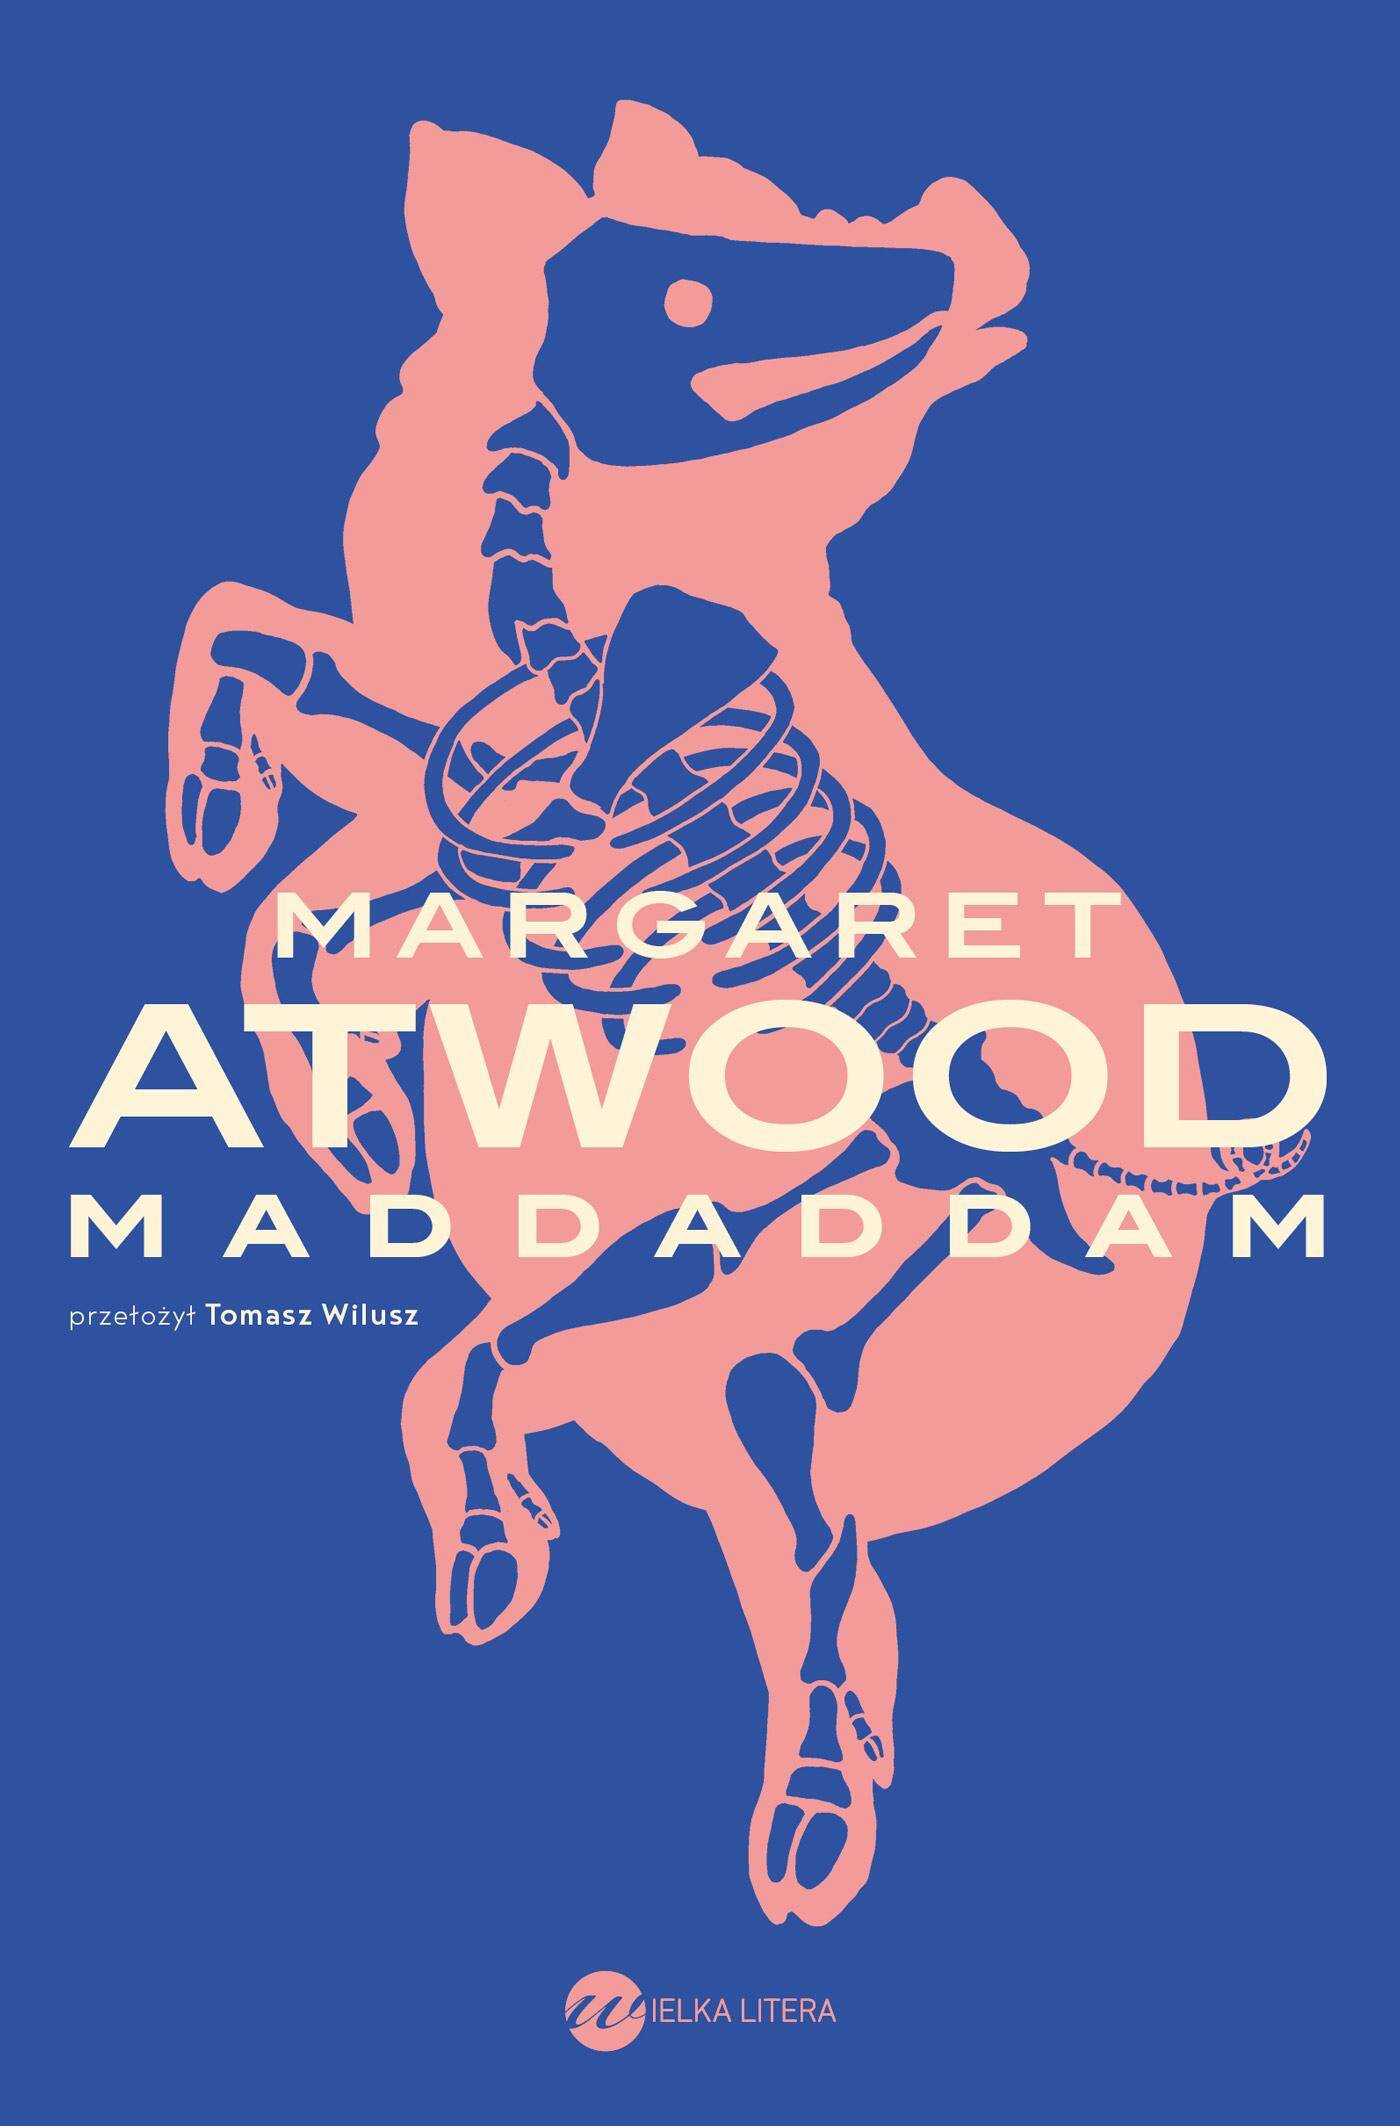 MaddAddam Atwood